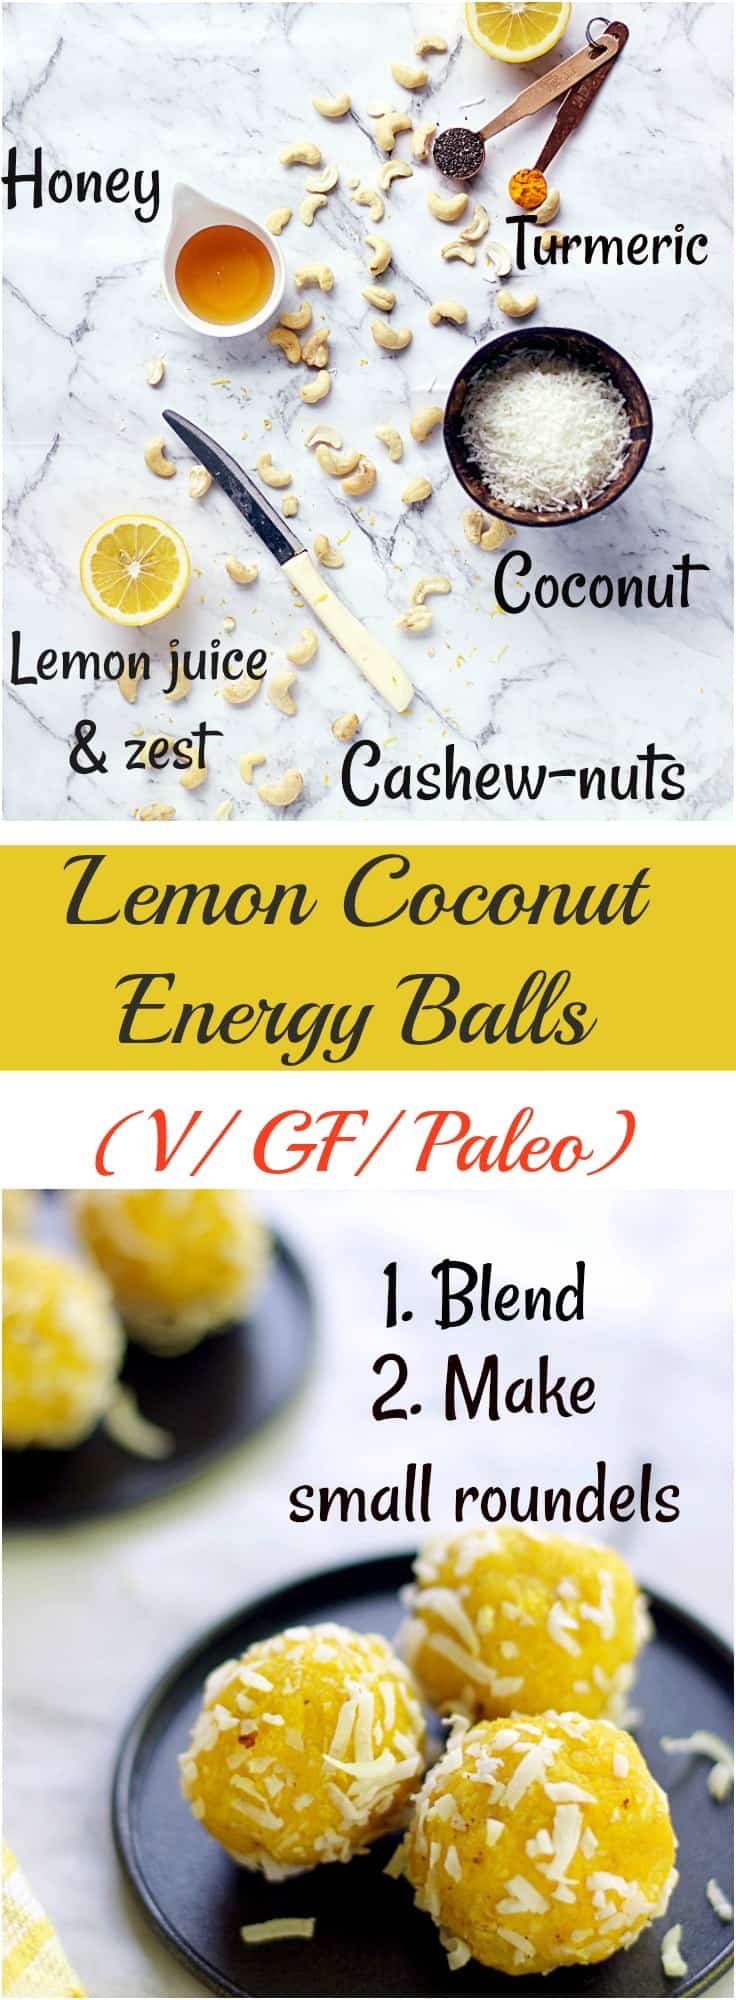 3 Healthy Energy Balls recipe ideas cranberry vanilla lemon coconut brownie cocoa powder